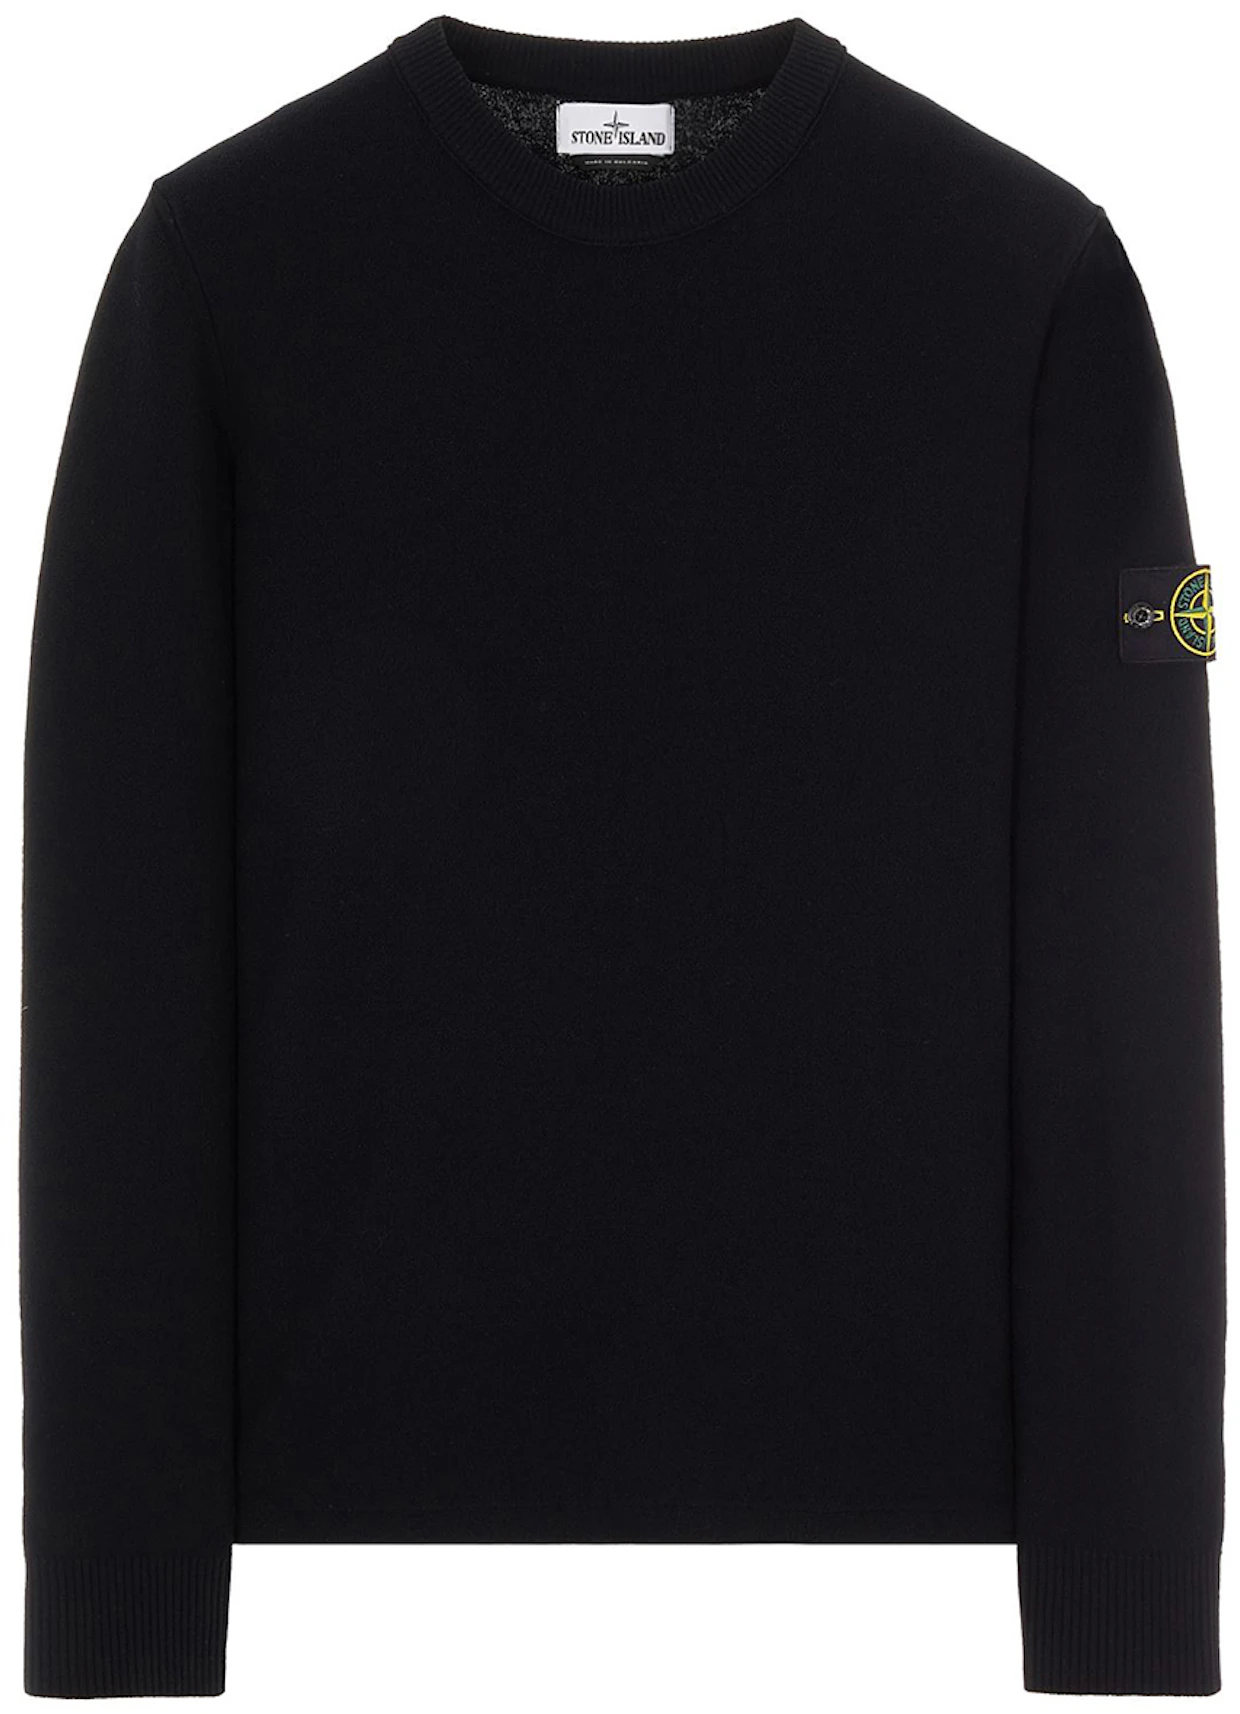 Stone Island Logo Appliqued Wool Knit Sweater Black - FW22 - GB